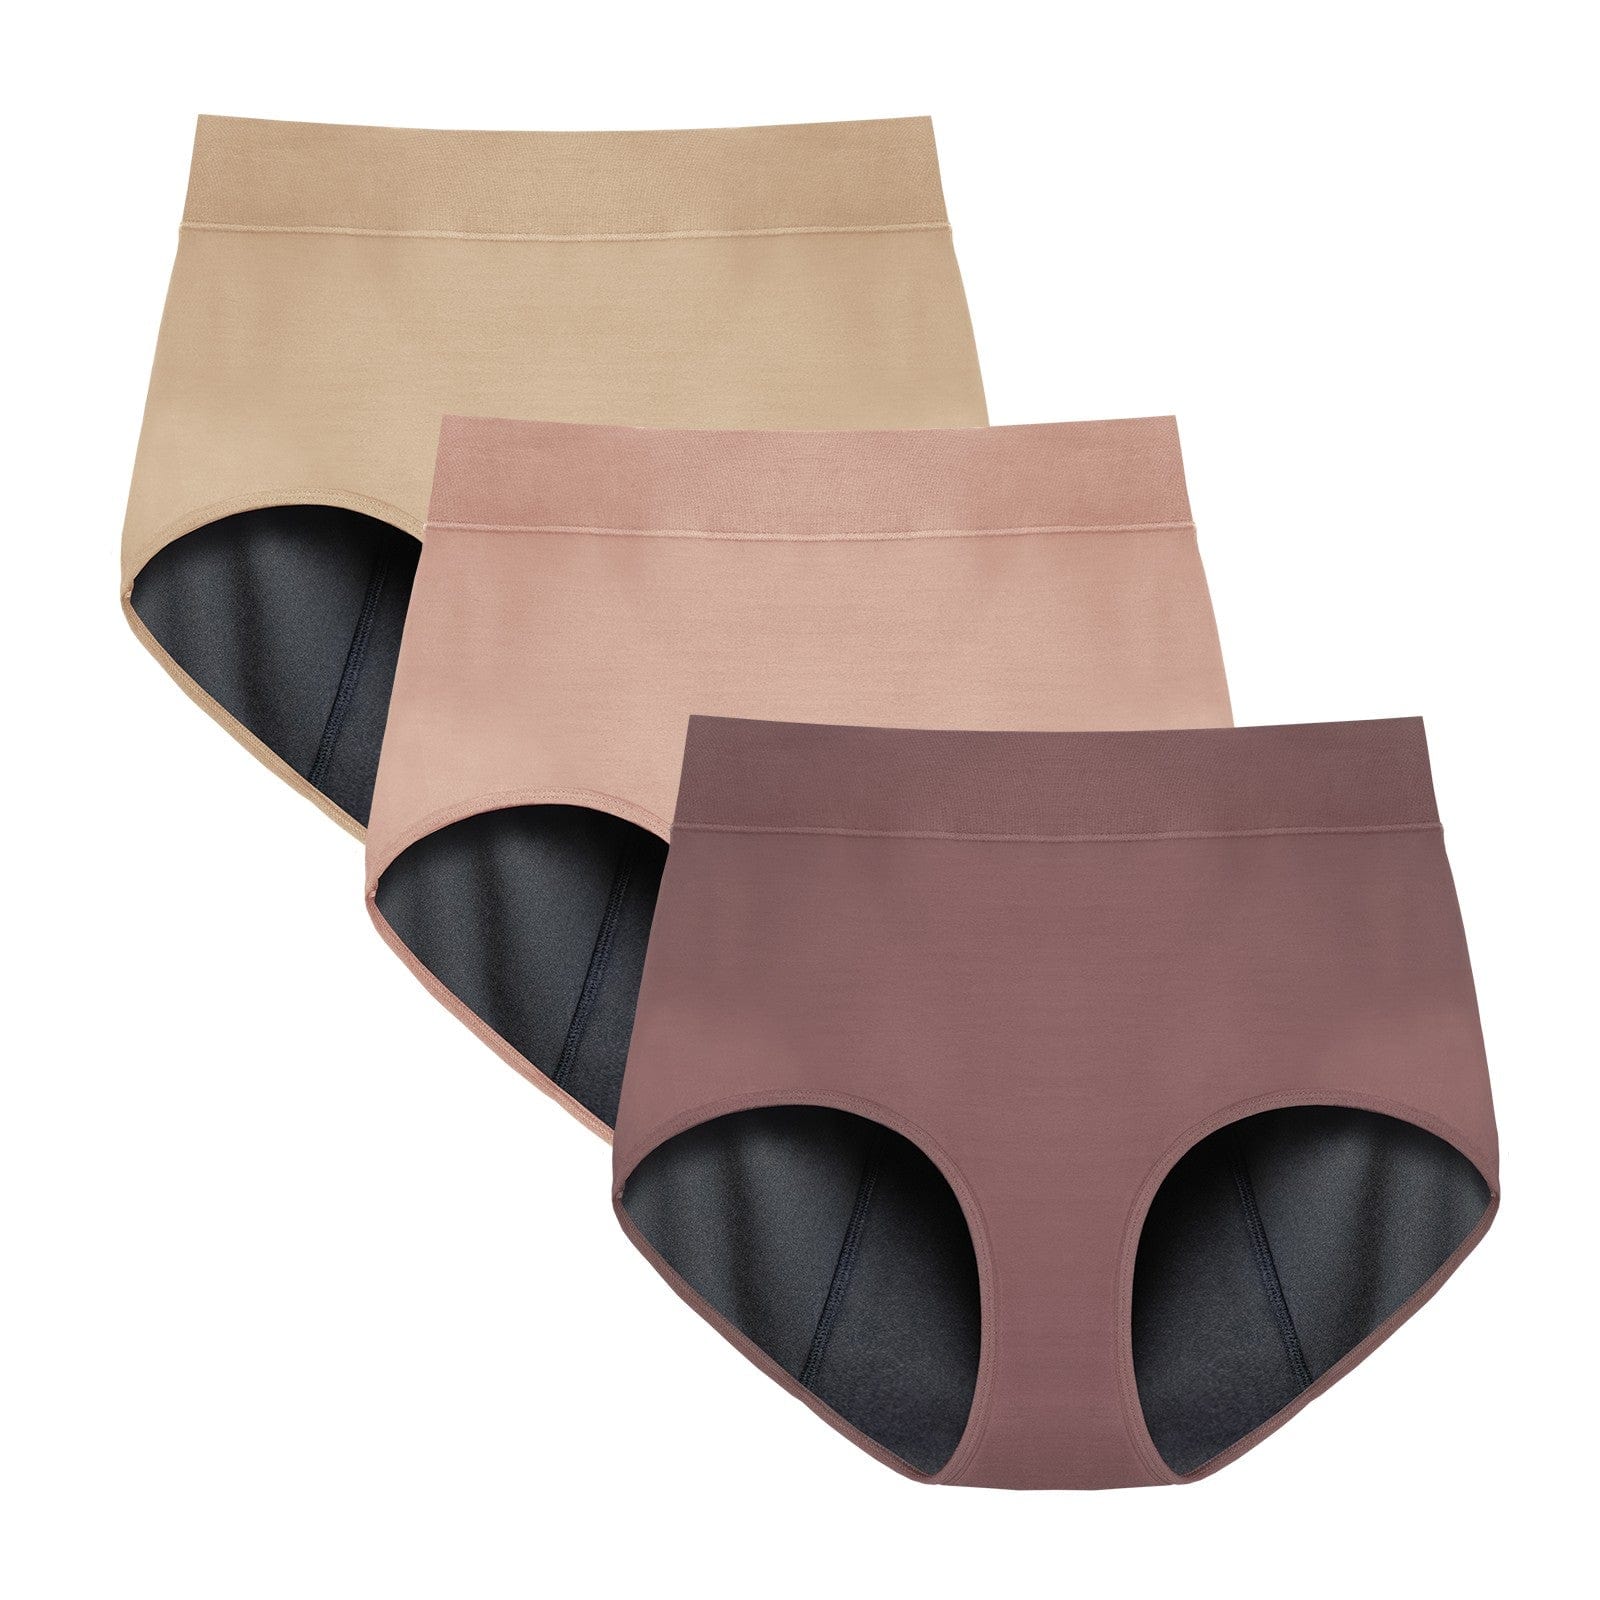 TIICHOO Period Underwear for Women Silky Soft Absorbent Hipster